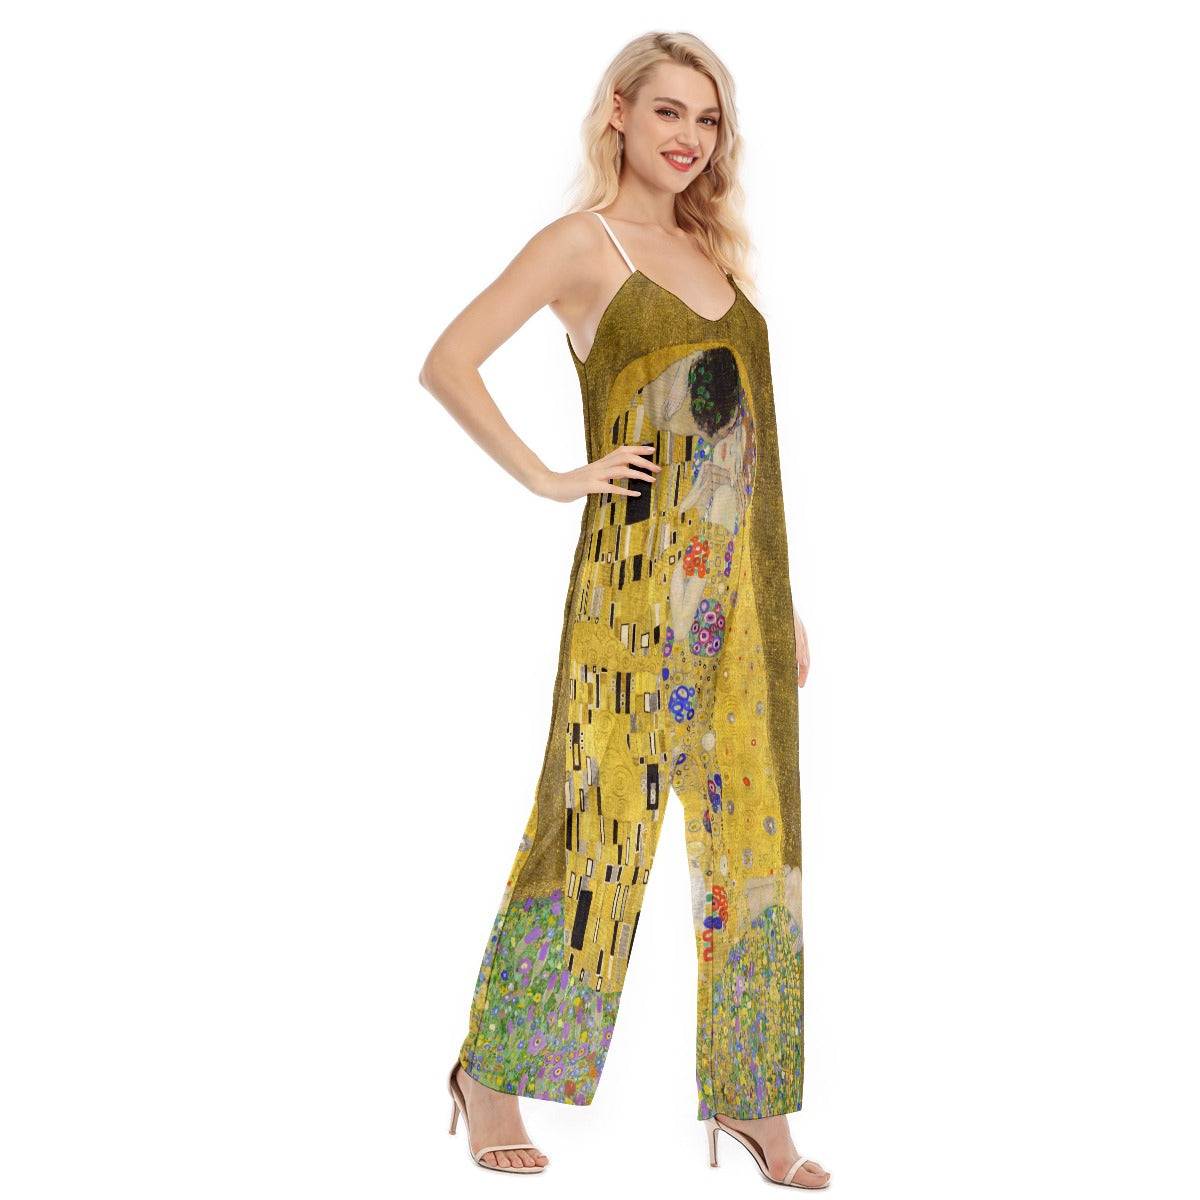 Klimt Inspired Clothing